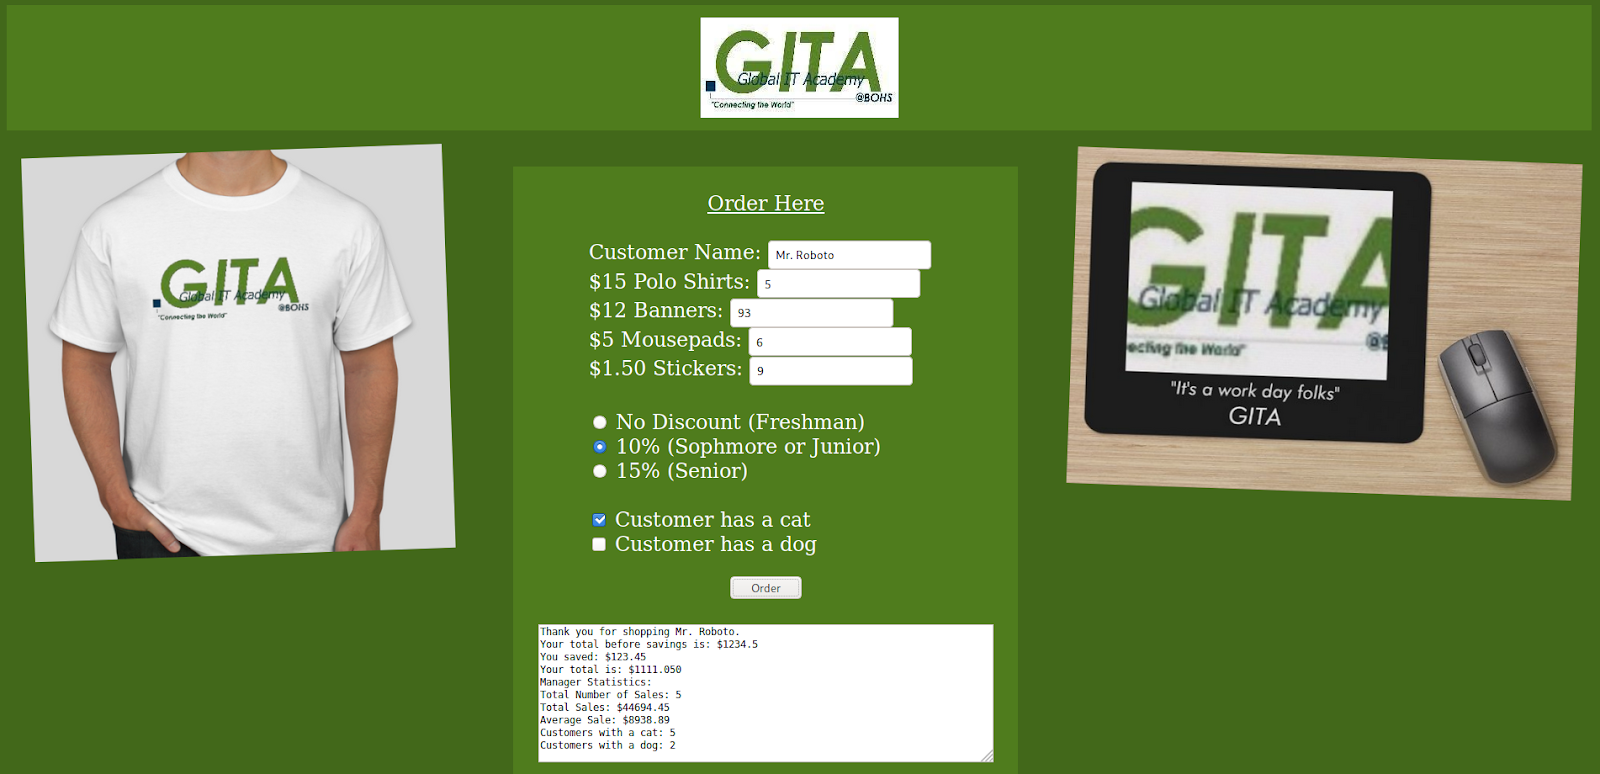 Upgraded GITA Gear image has not loaded